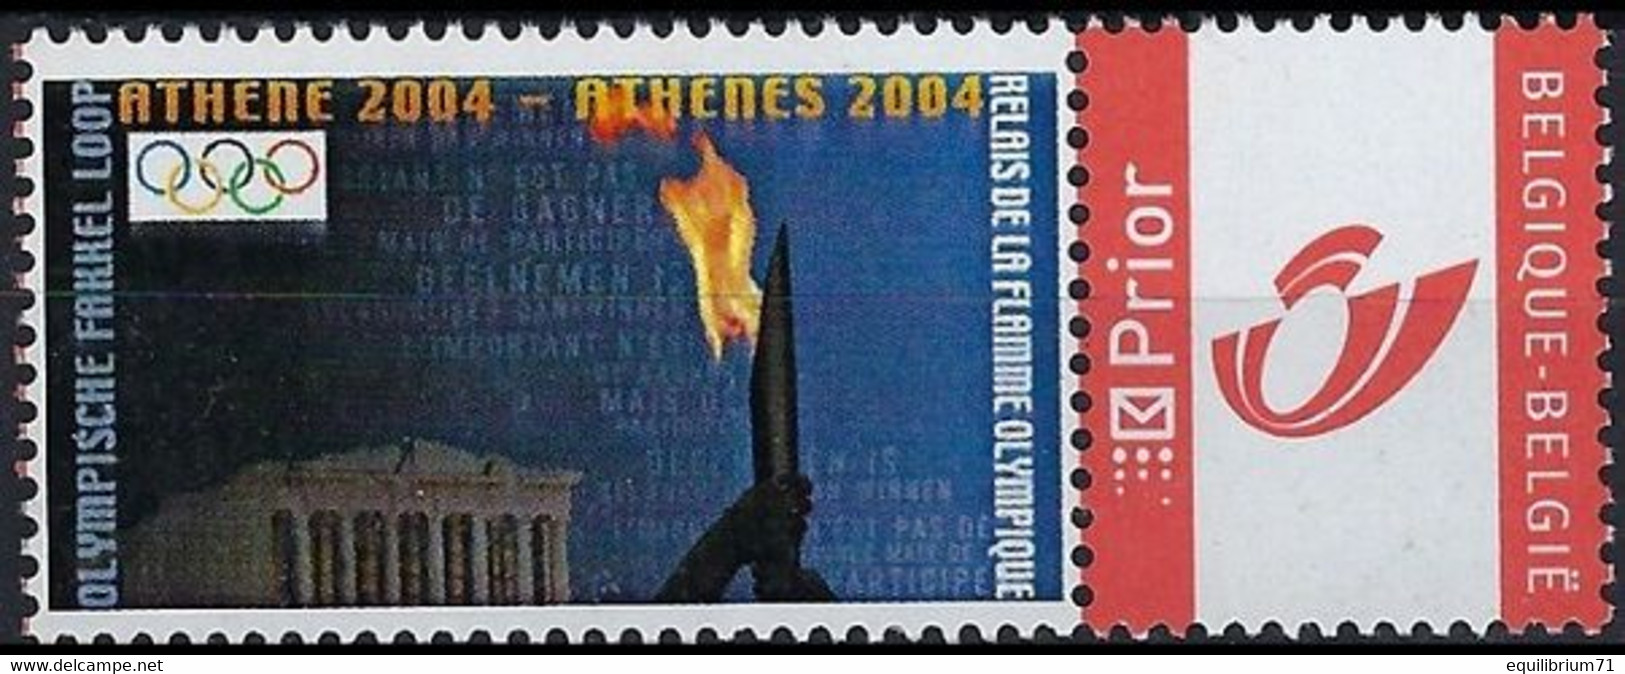 DUOSTAMP** / MYSTAMP** - Relais De La Flamme Des Jeux Olympiques D'Athènes / Olympische Spelen Fakkelloop Athene - 2004 - Summer 2004: Athens - Paralympic